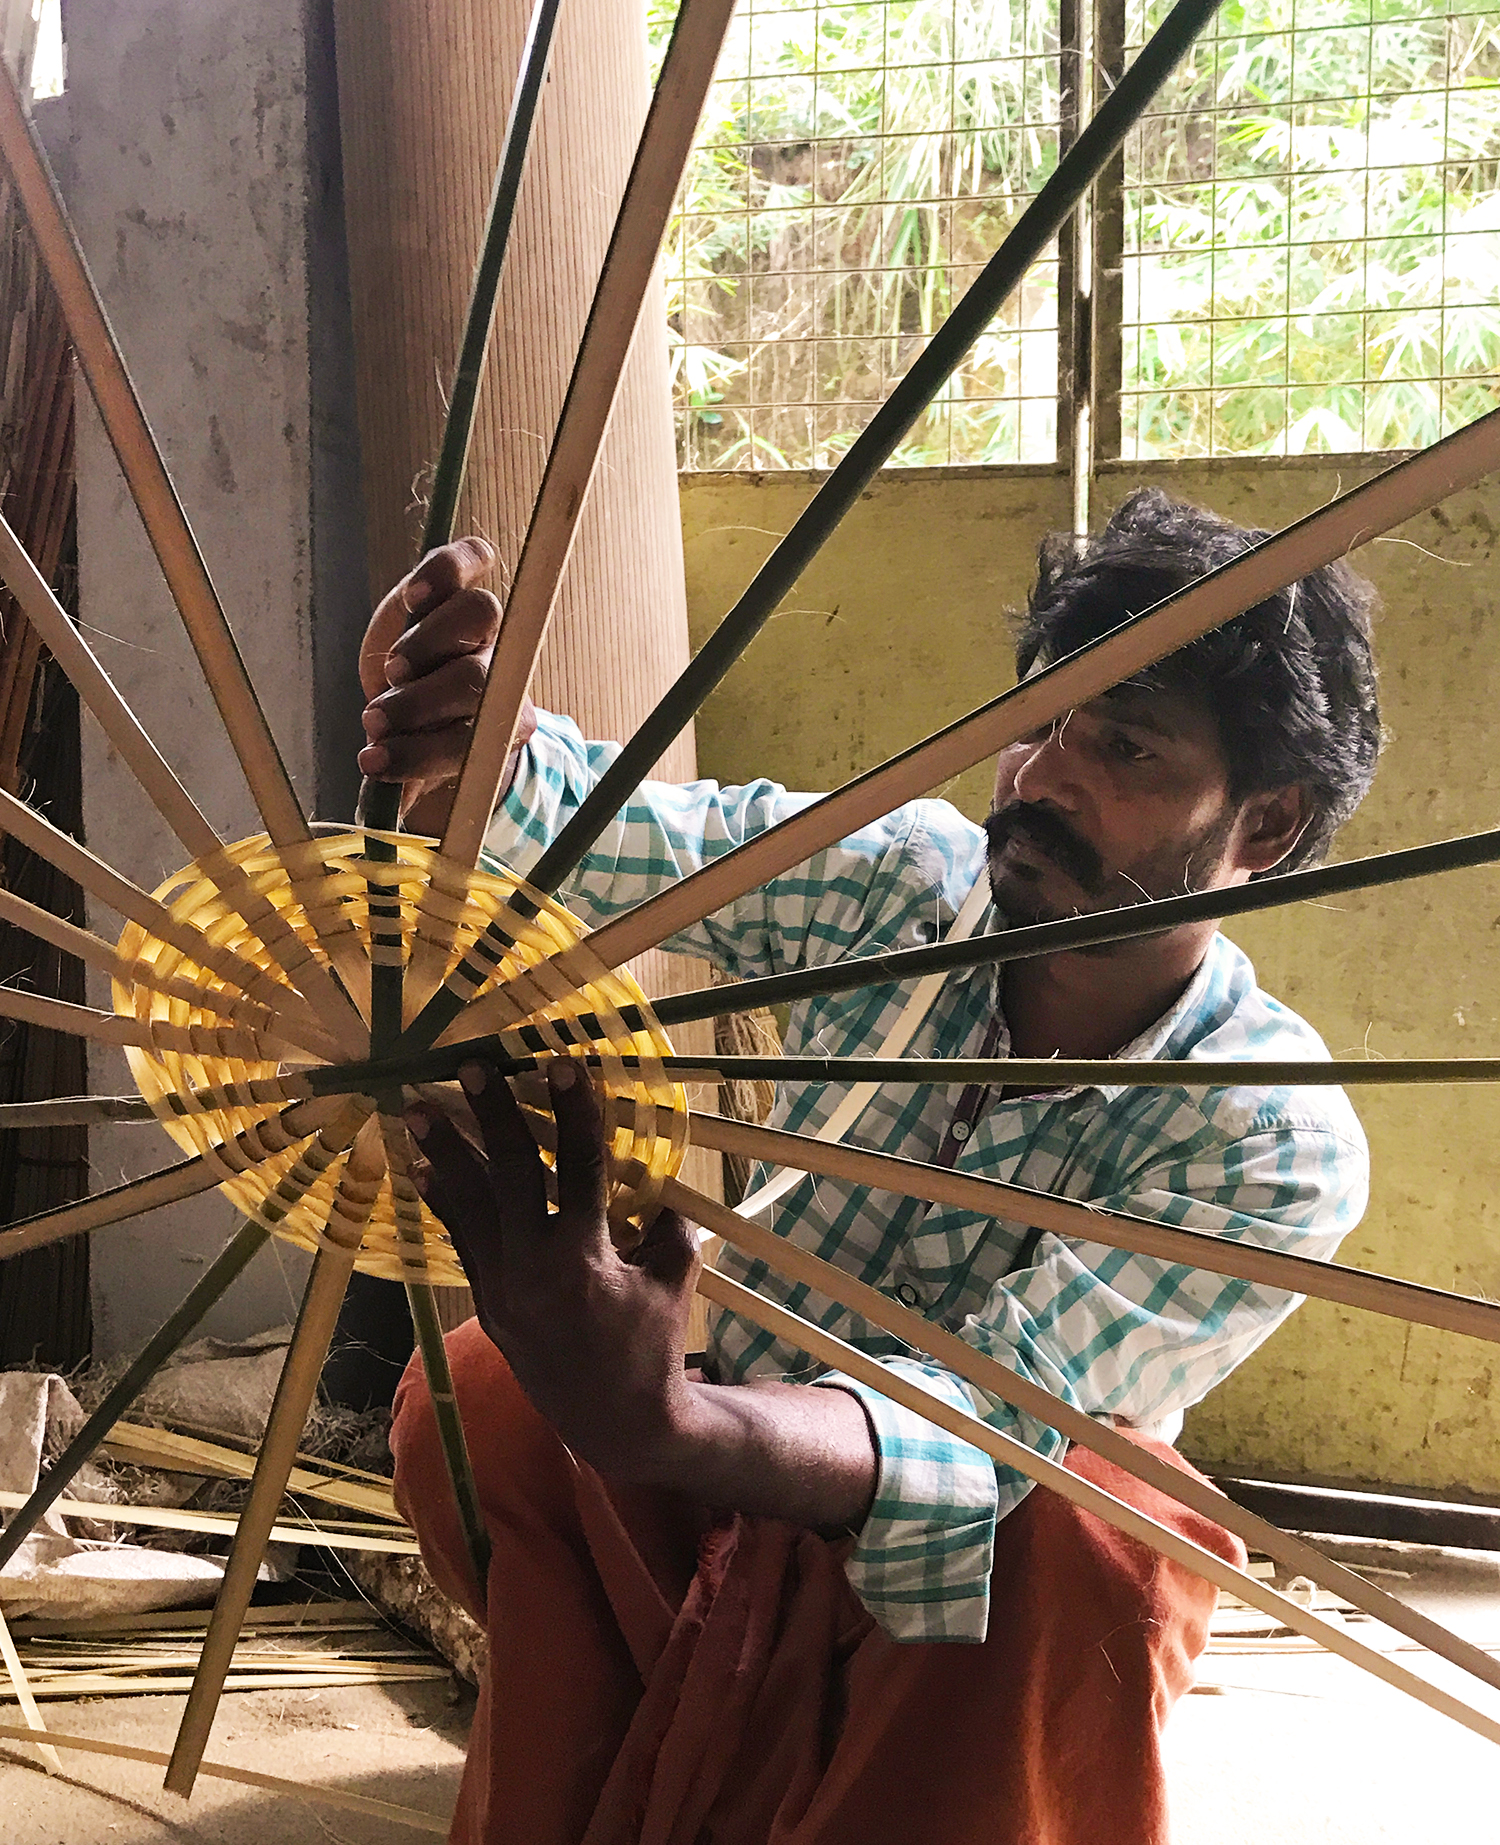 Raju the man for bamboo baskets.